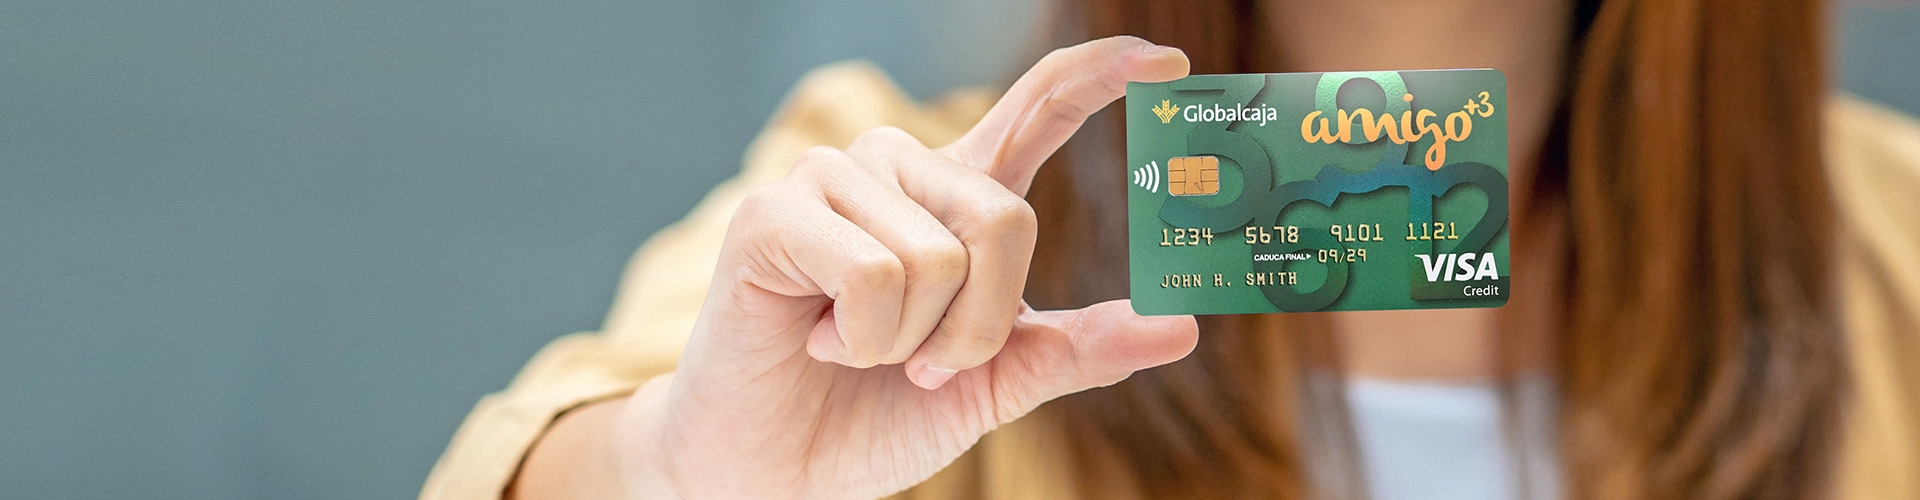 Chica sujetando tarjeta de crédito Amigo +3 de Globalcaja